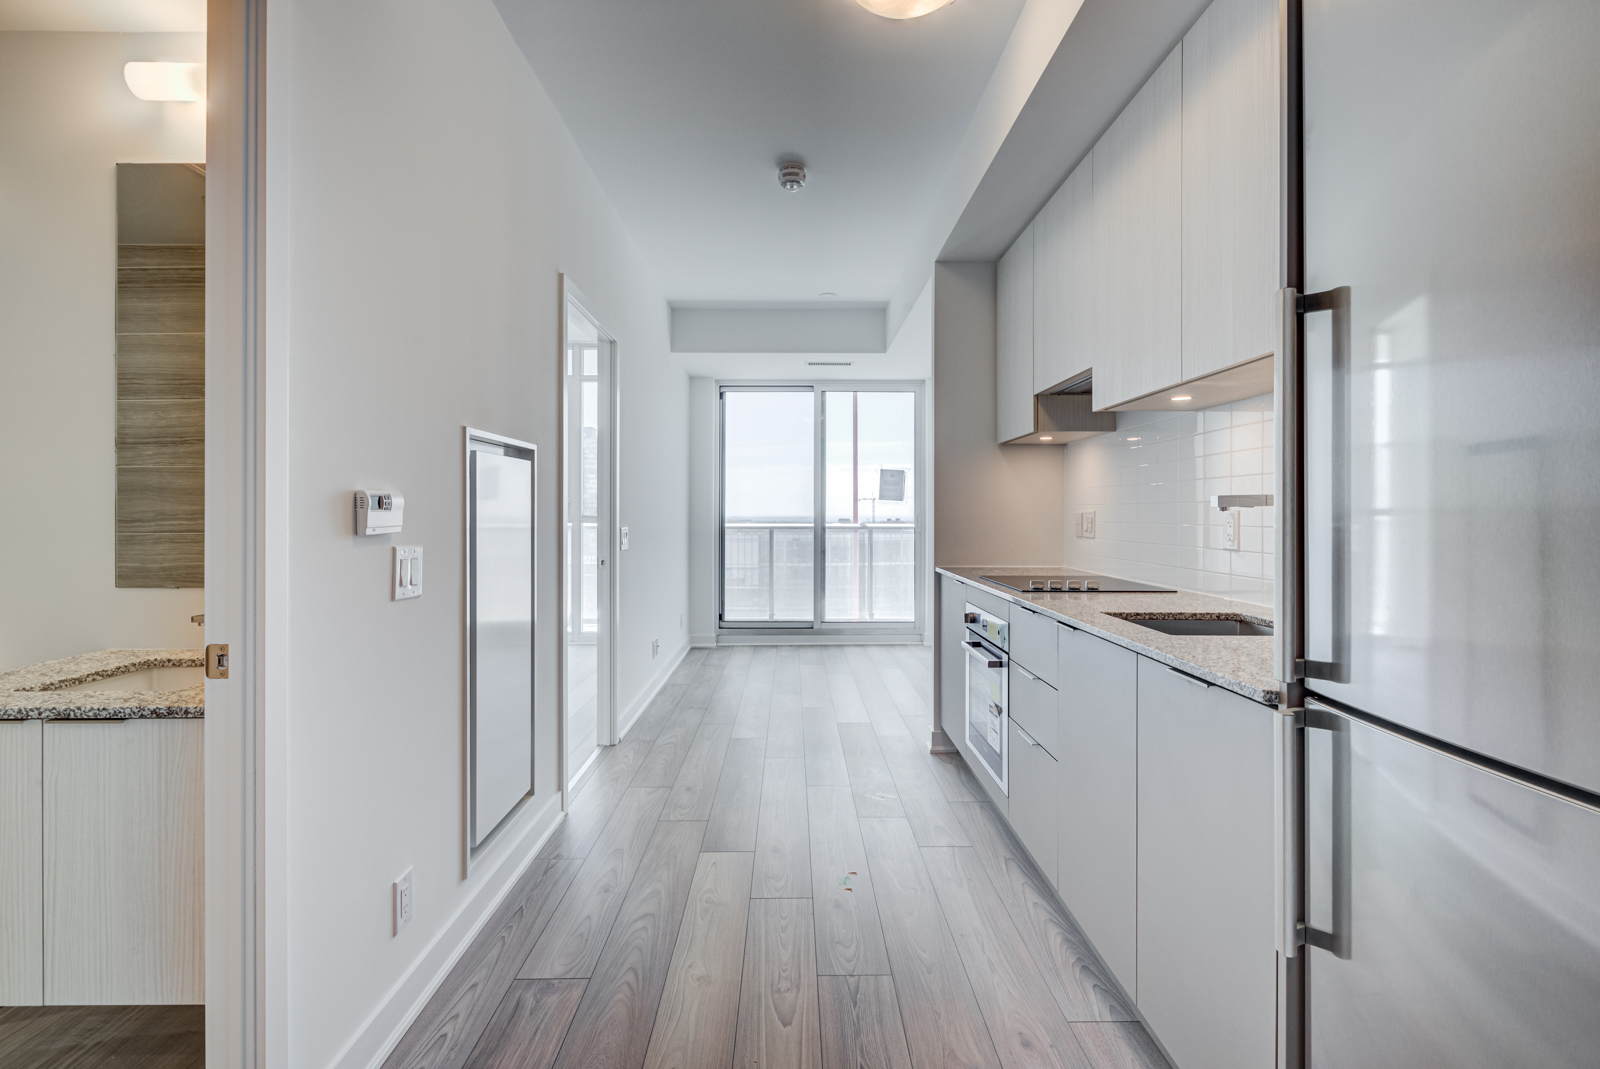 Condo with laminate floors and light gray walls.